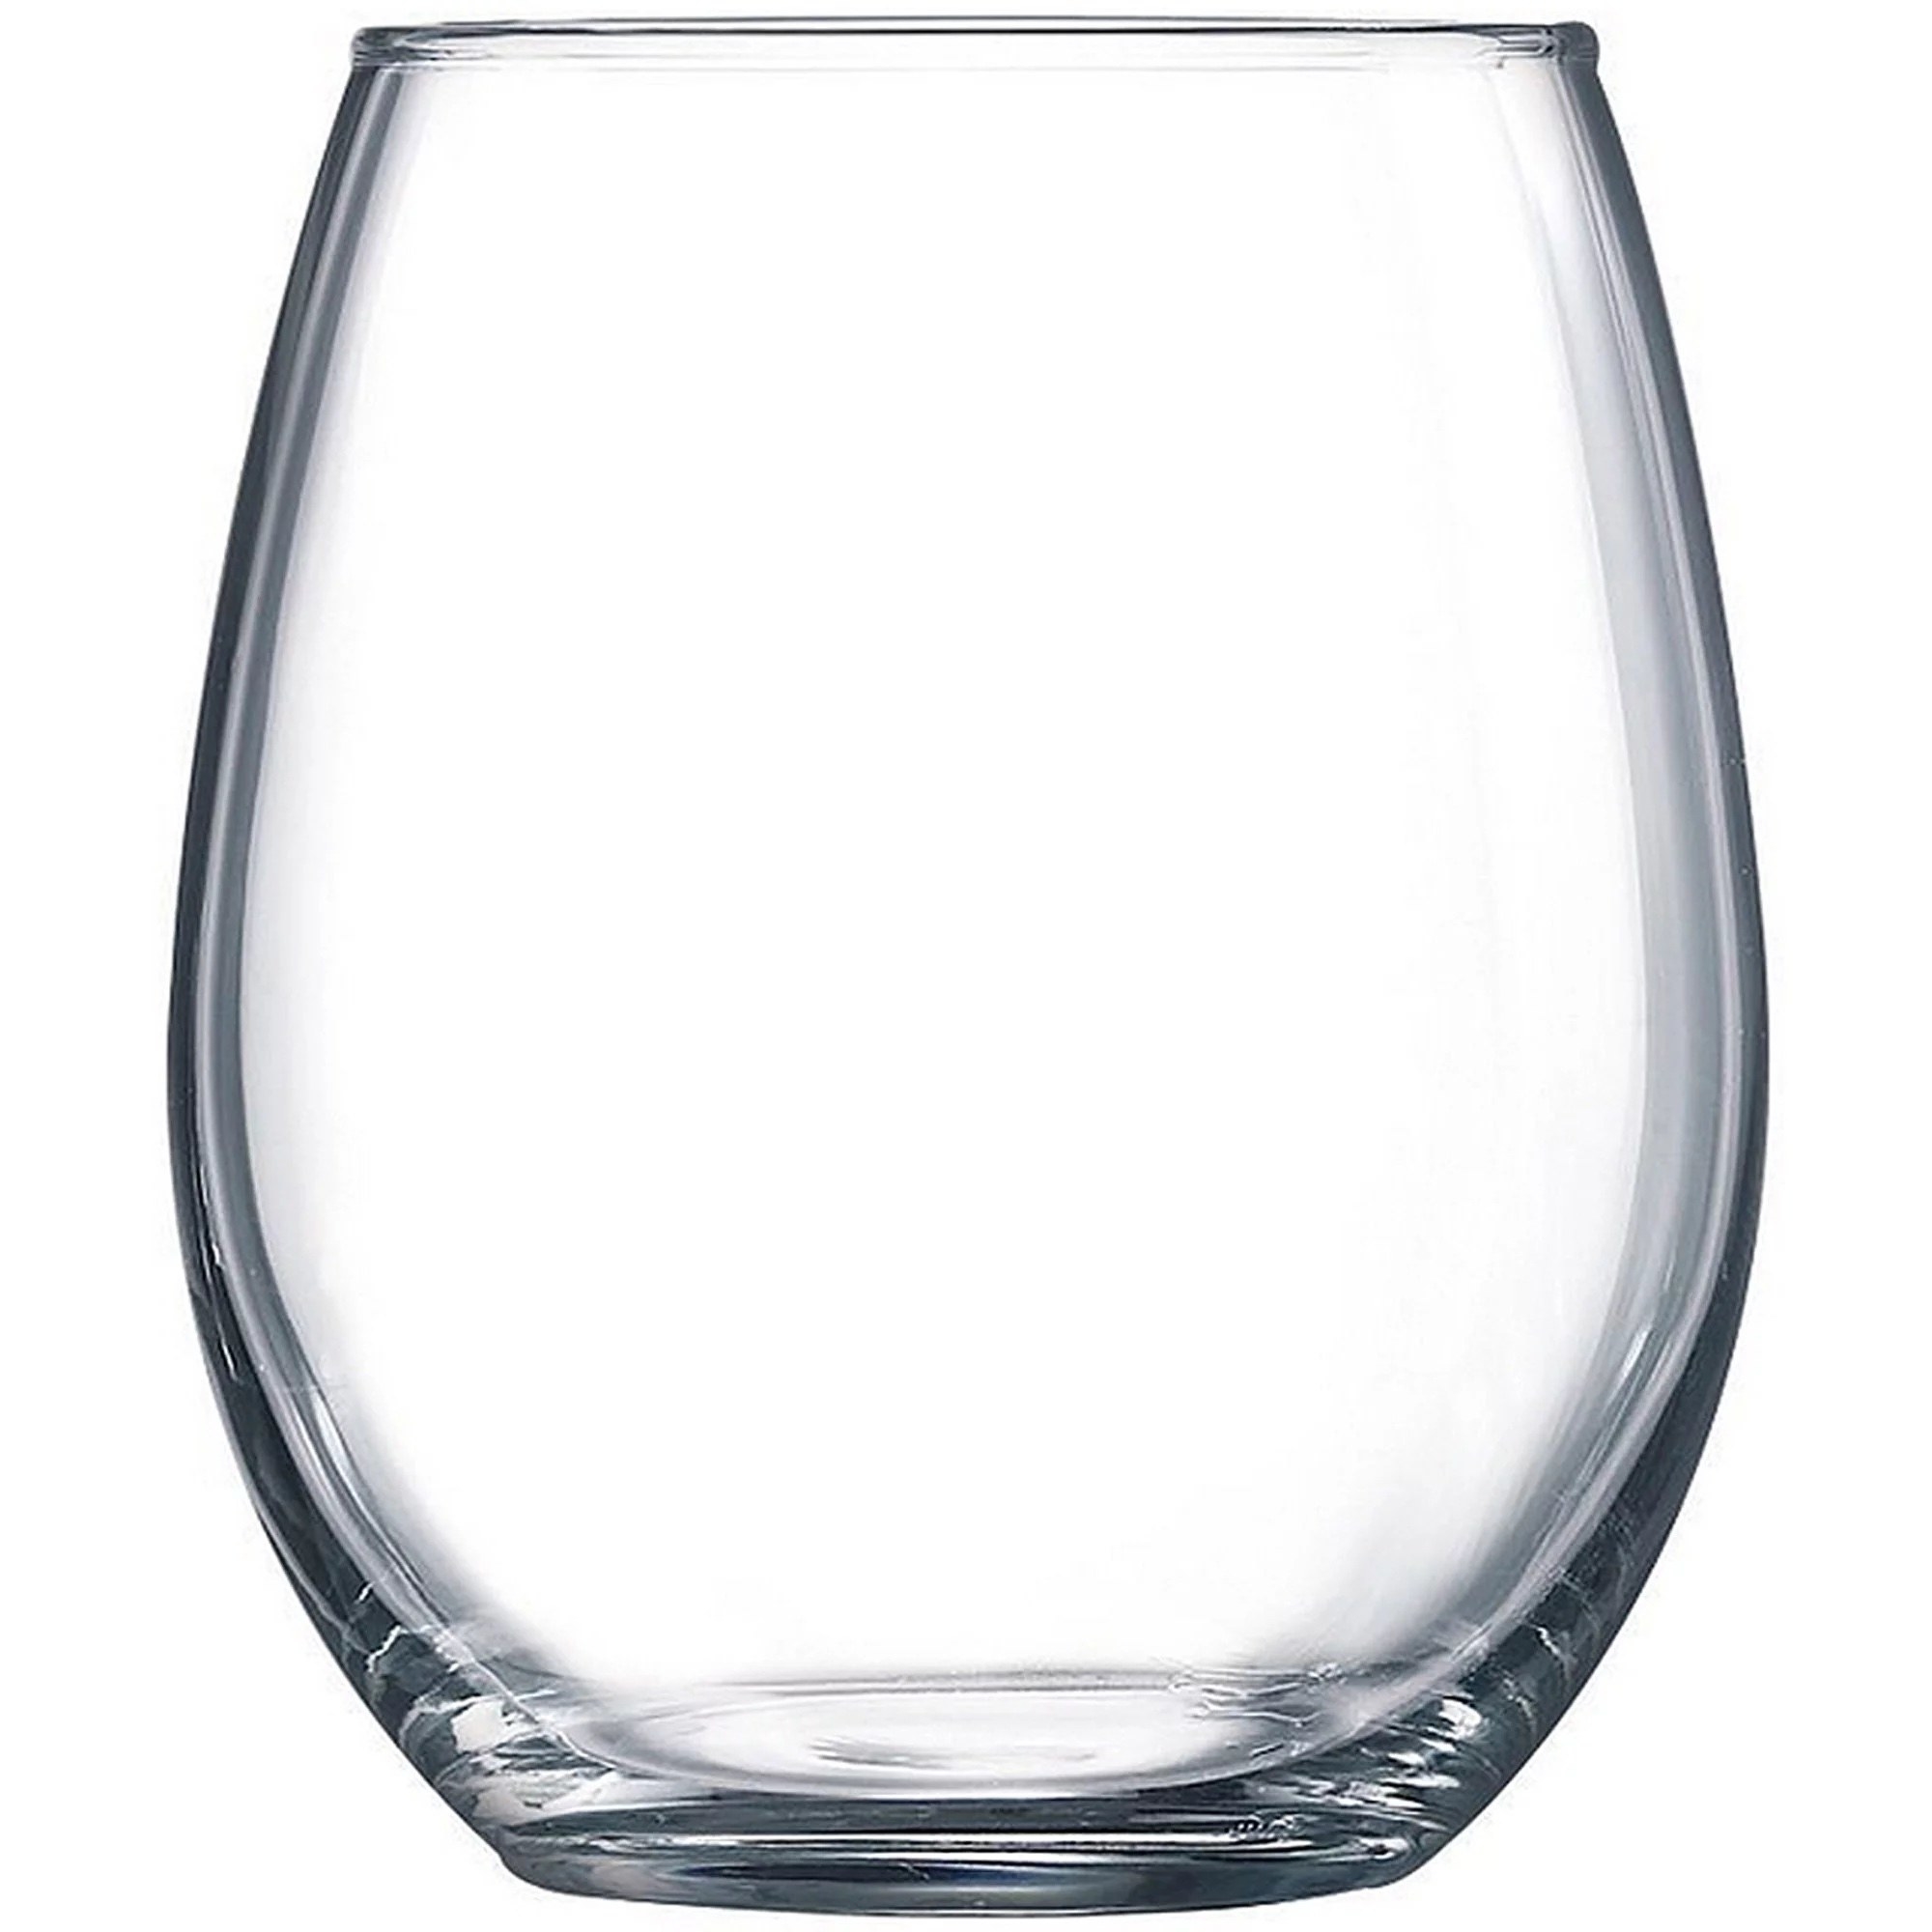 a short wine glass